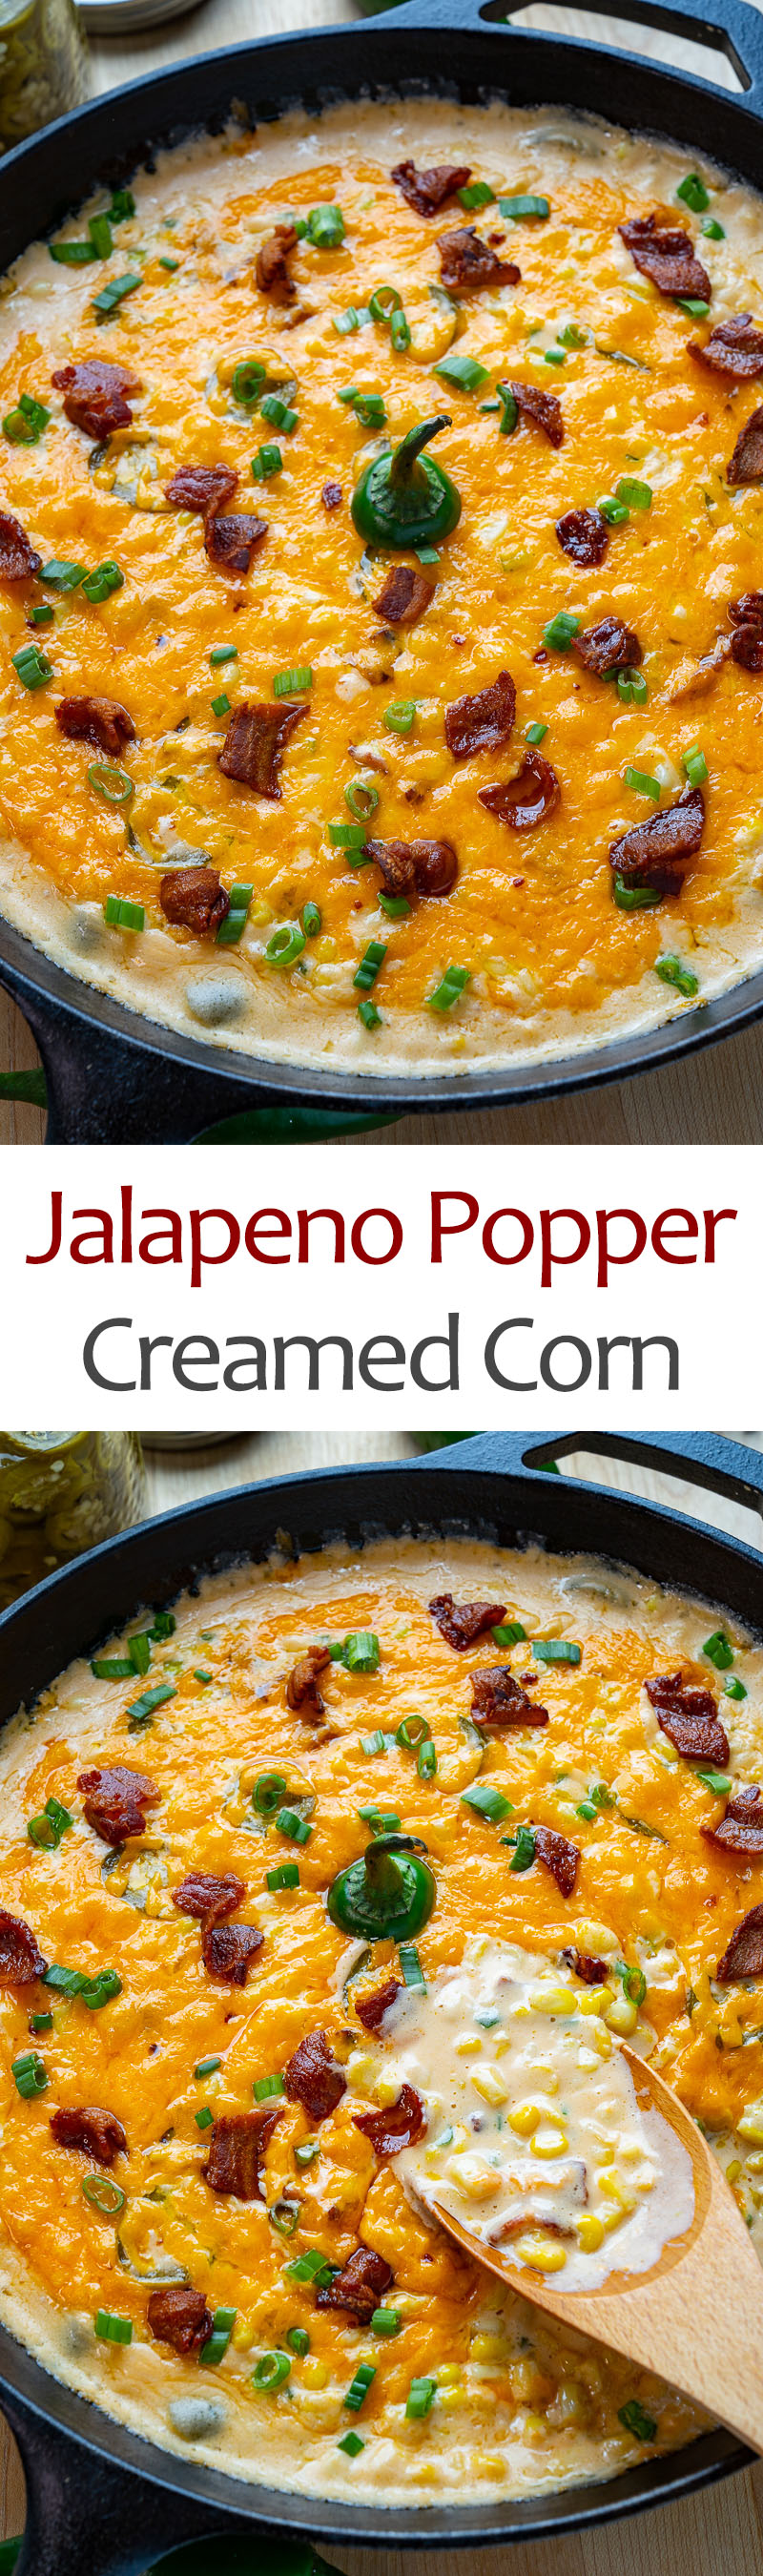 Jalapeno Popper Creamed Corn